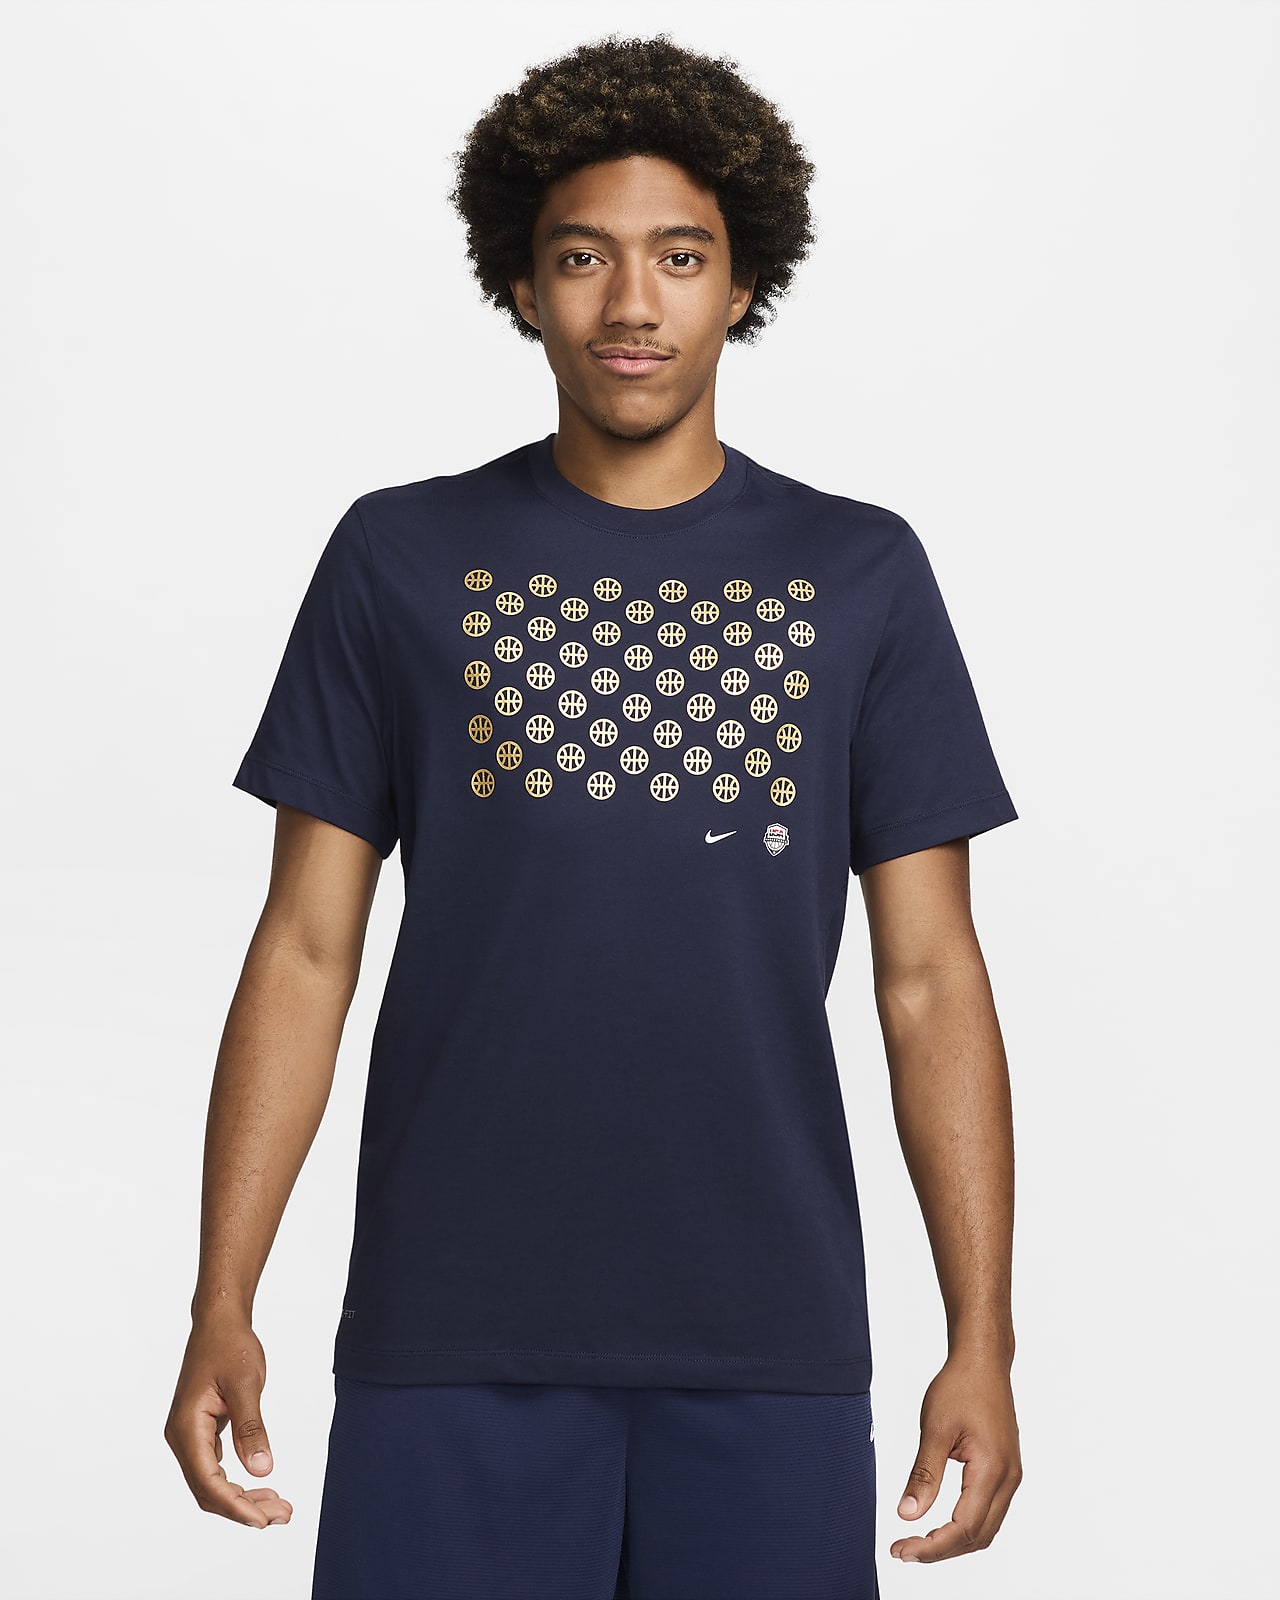 USA メンズ ナイキ バスケットボール Tシャツ